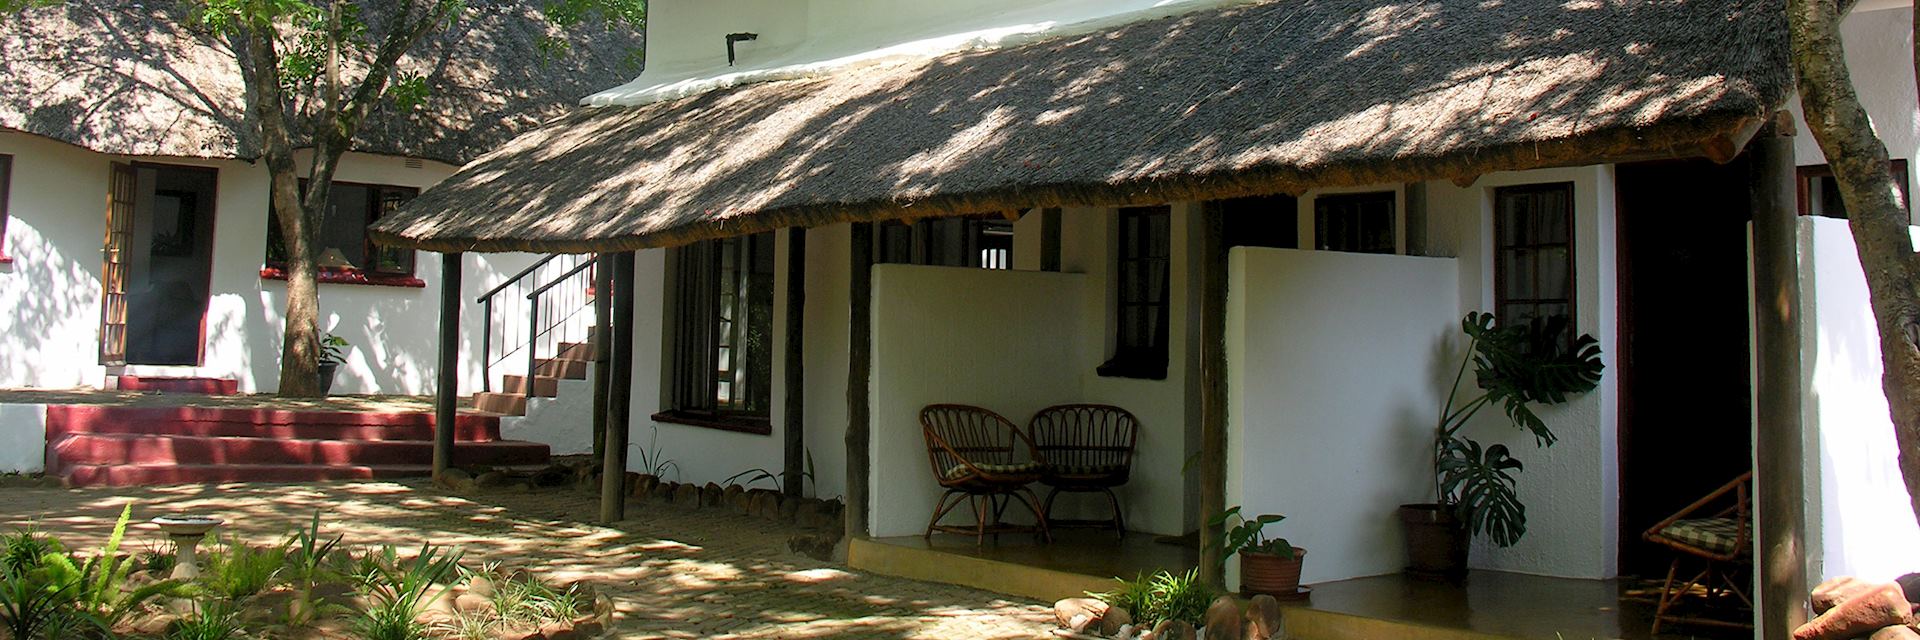 Rissington Inn, South Africa